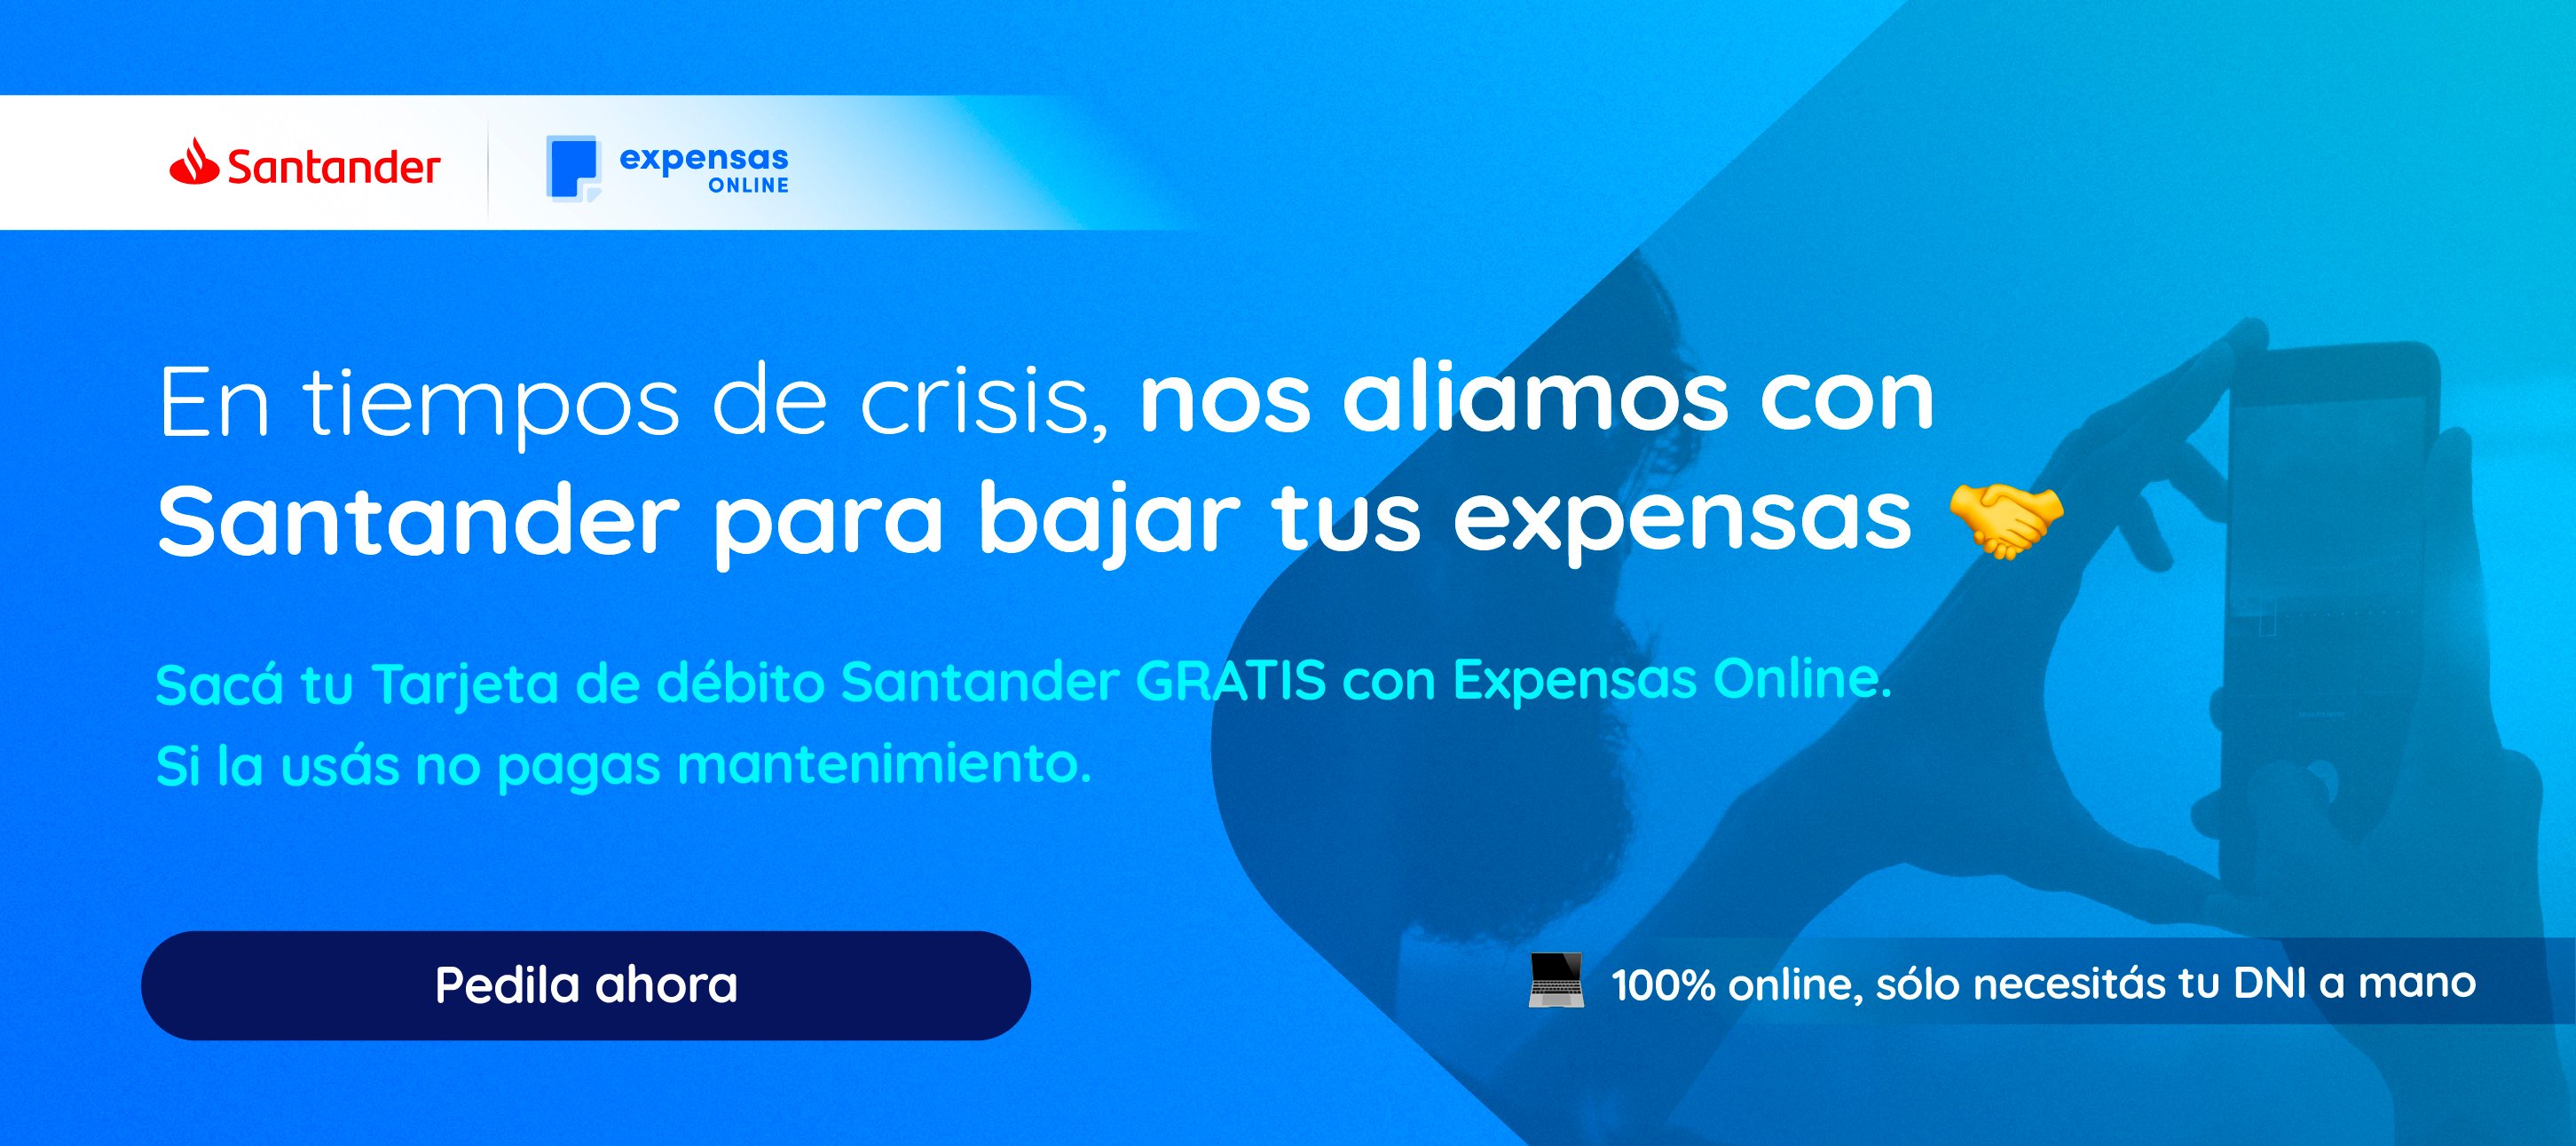 expensas-online-banco-santander-bajan-tus-expensas